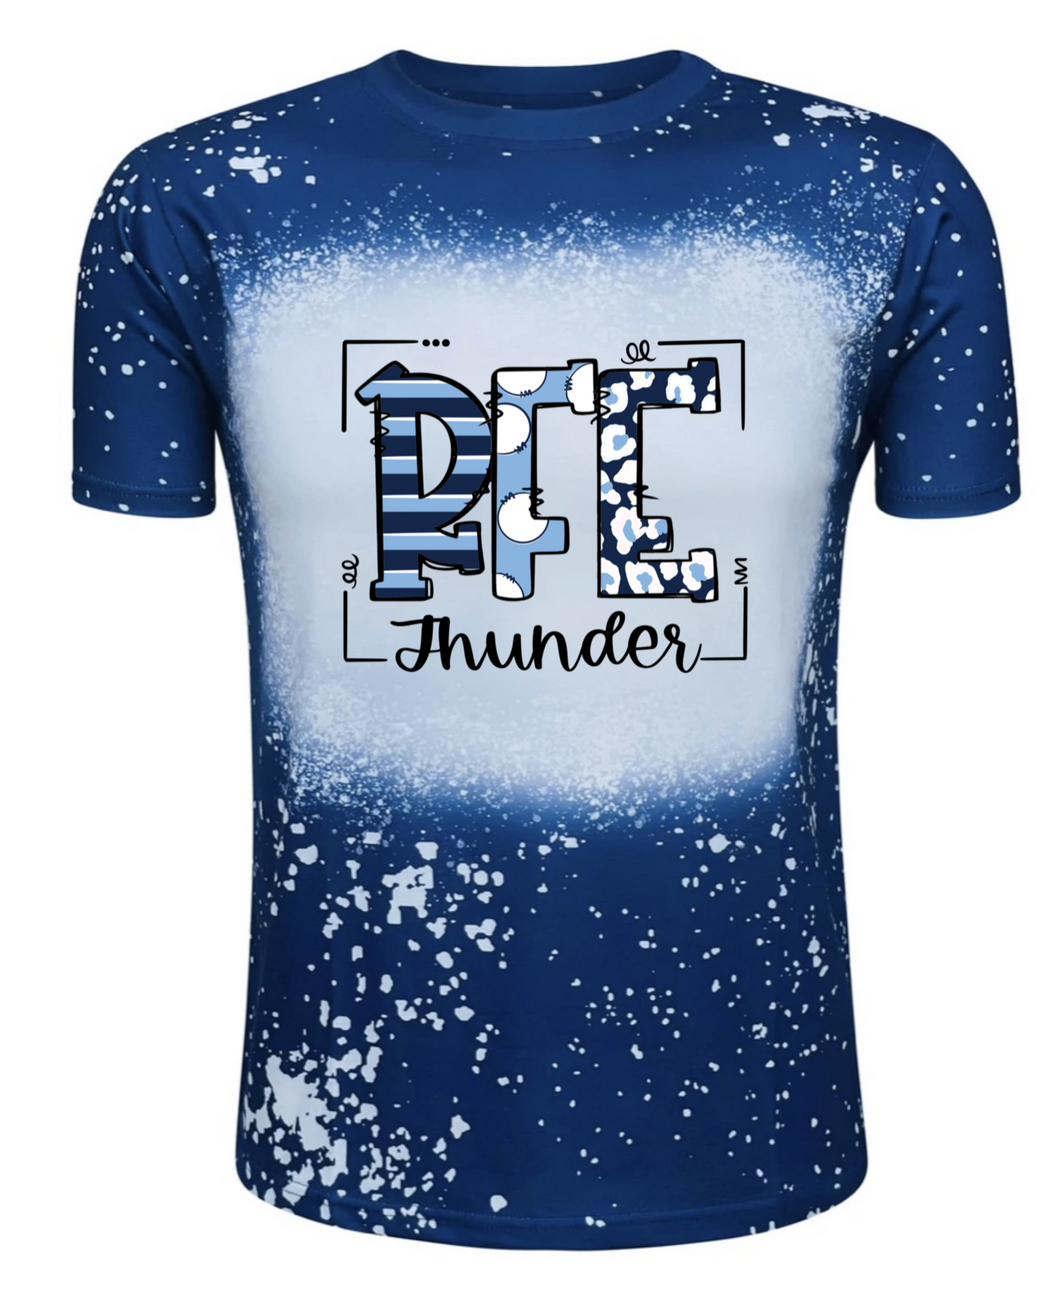 RFE Thunder Bleached Tshirt *LIMITED EDITION *